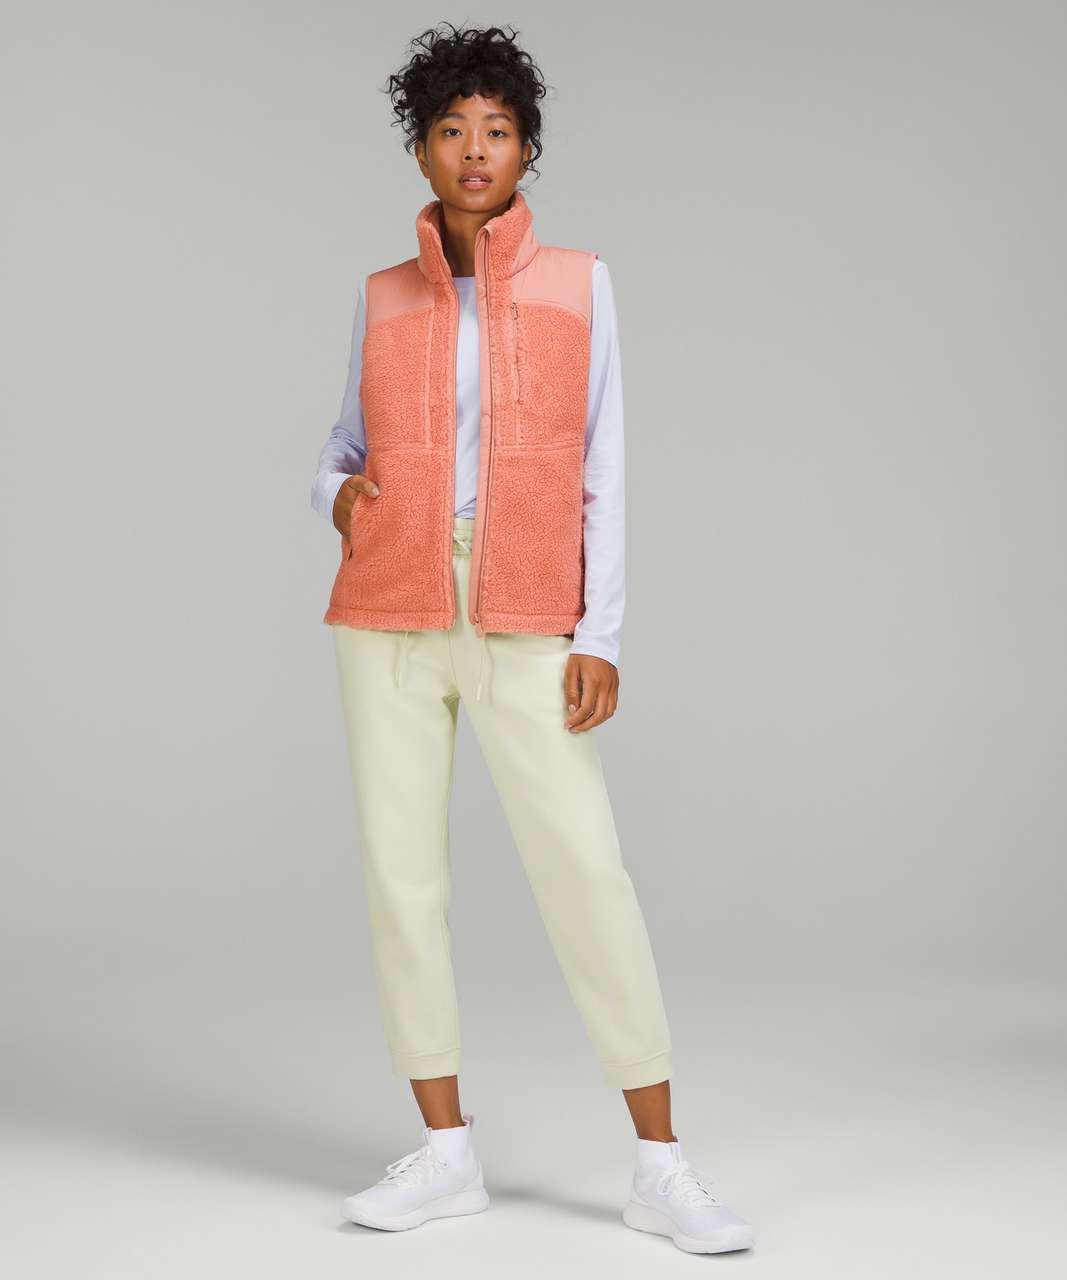 Lululemon Textured Fleece Full-Zip Vest - Pink Savannah